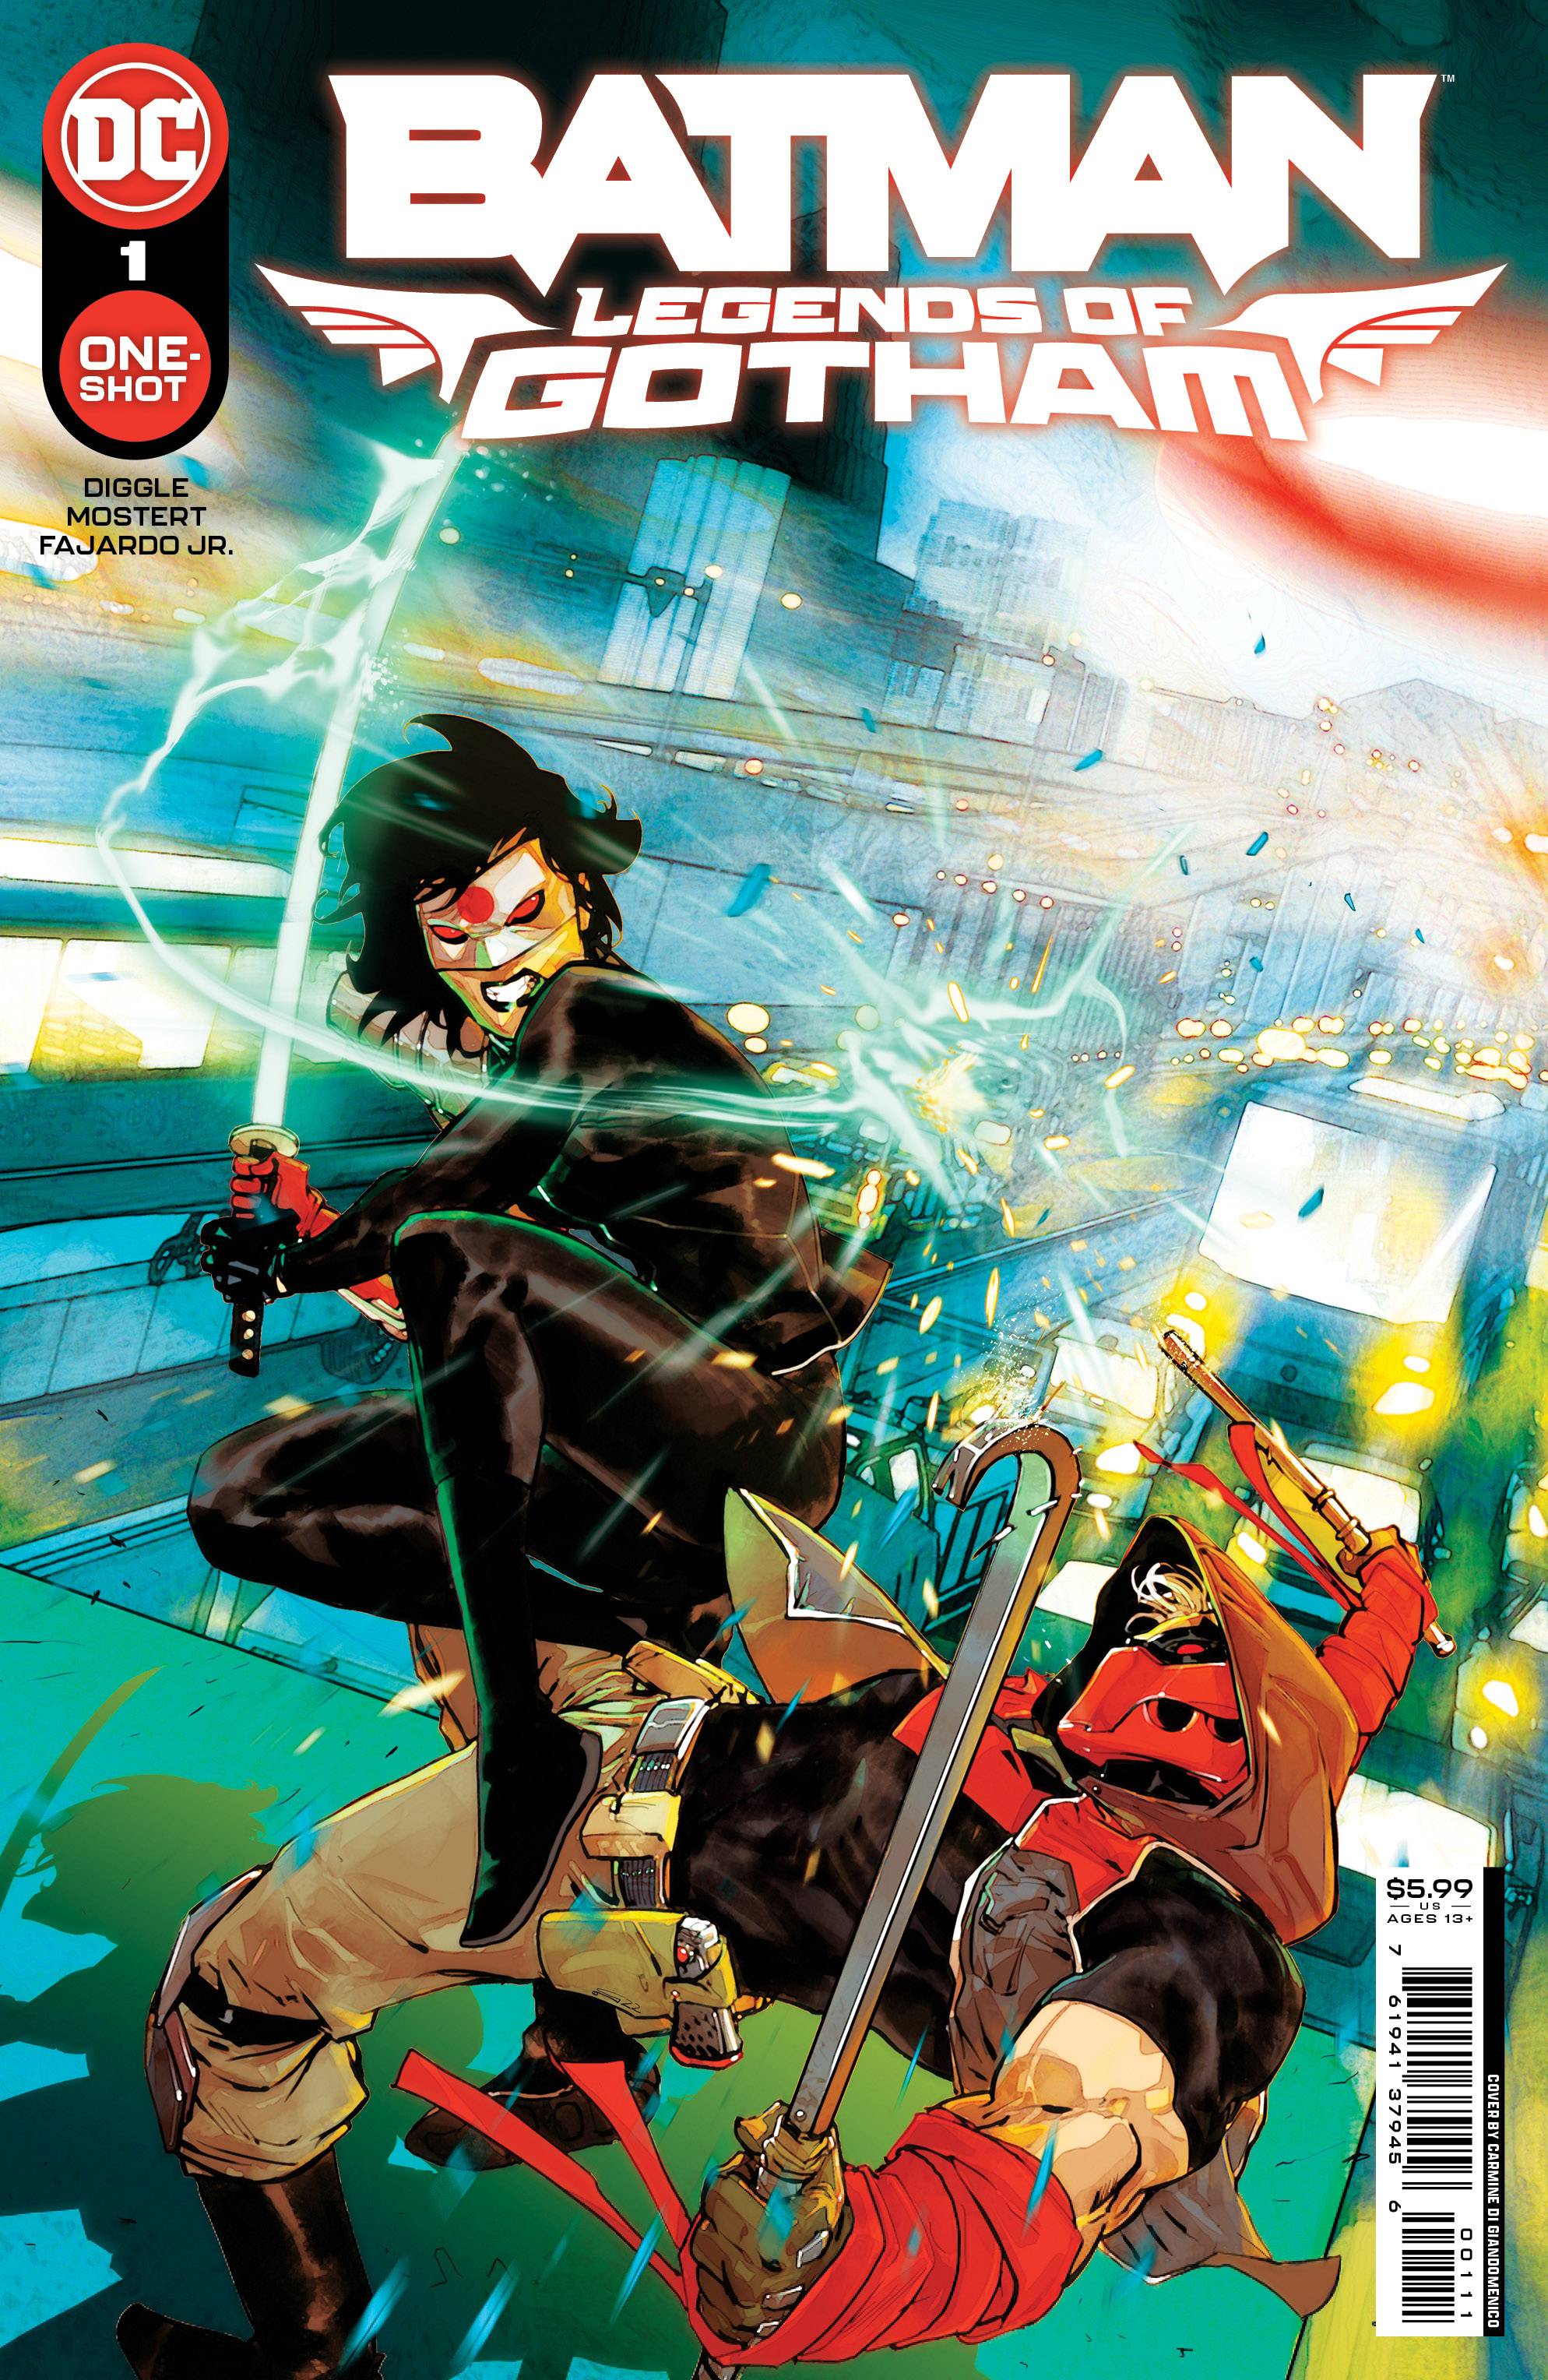 BATMAN LEGENDS OF GOTHAM #1 (ONE SHOT) CVR A DI GIANDOMENICO  DC COMICS (NOV22)